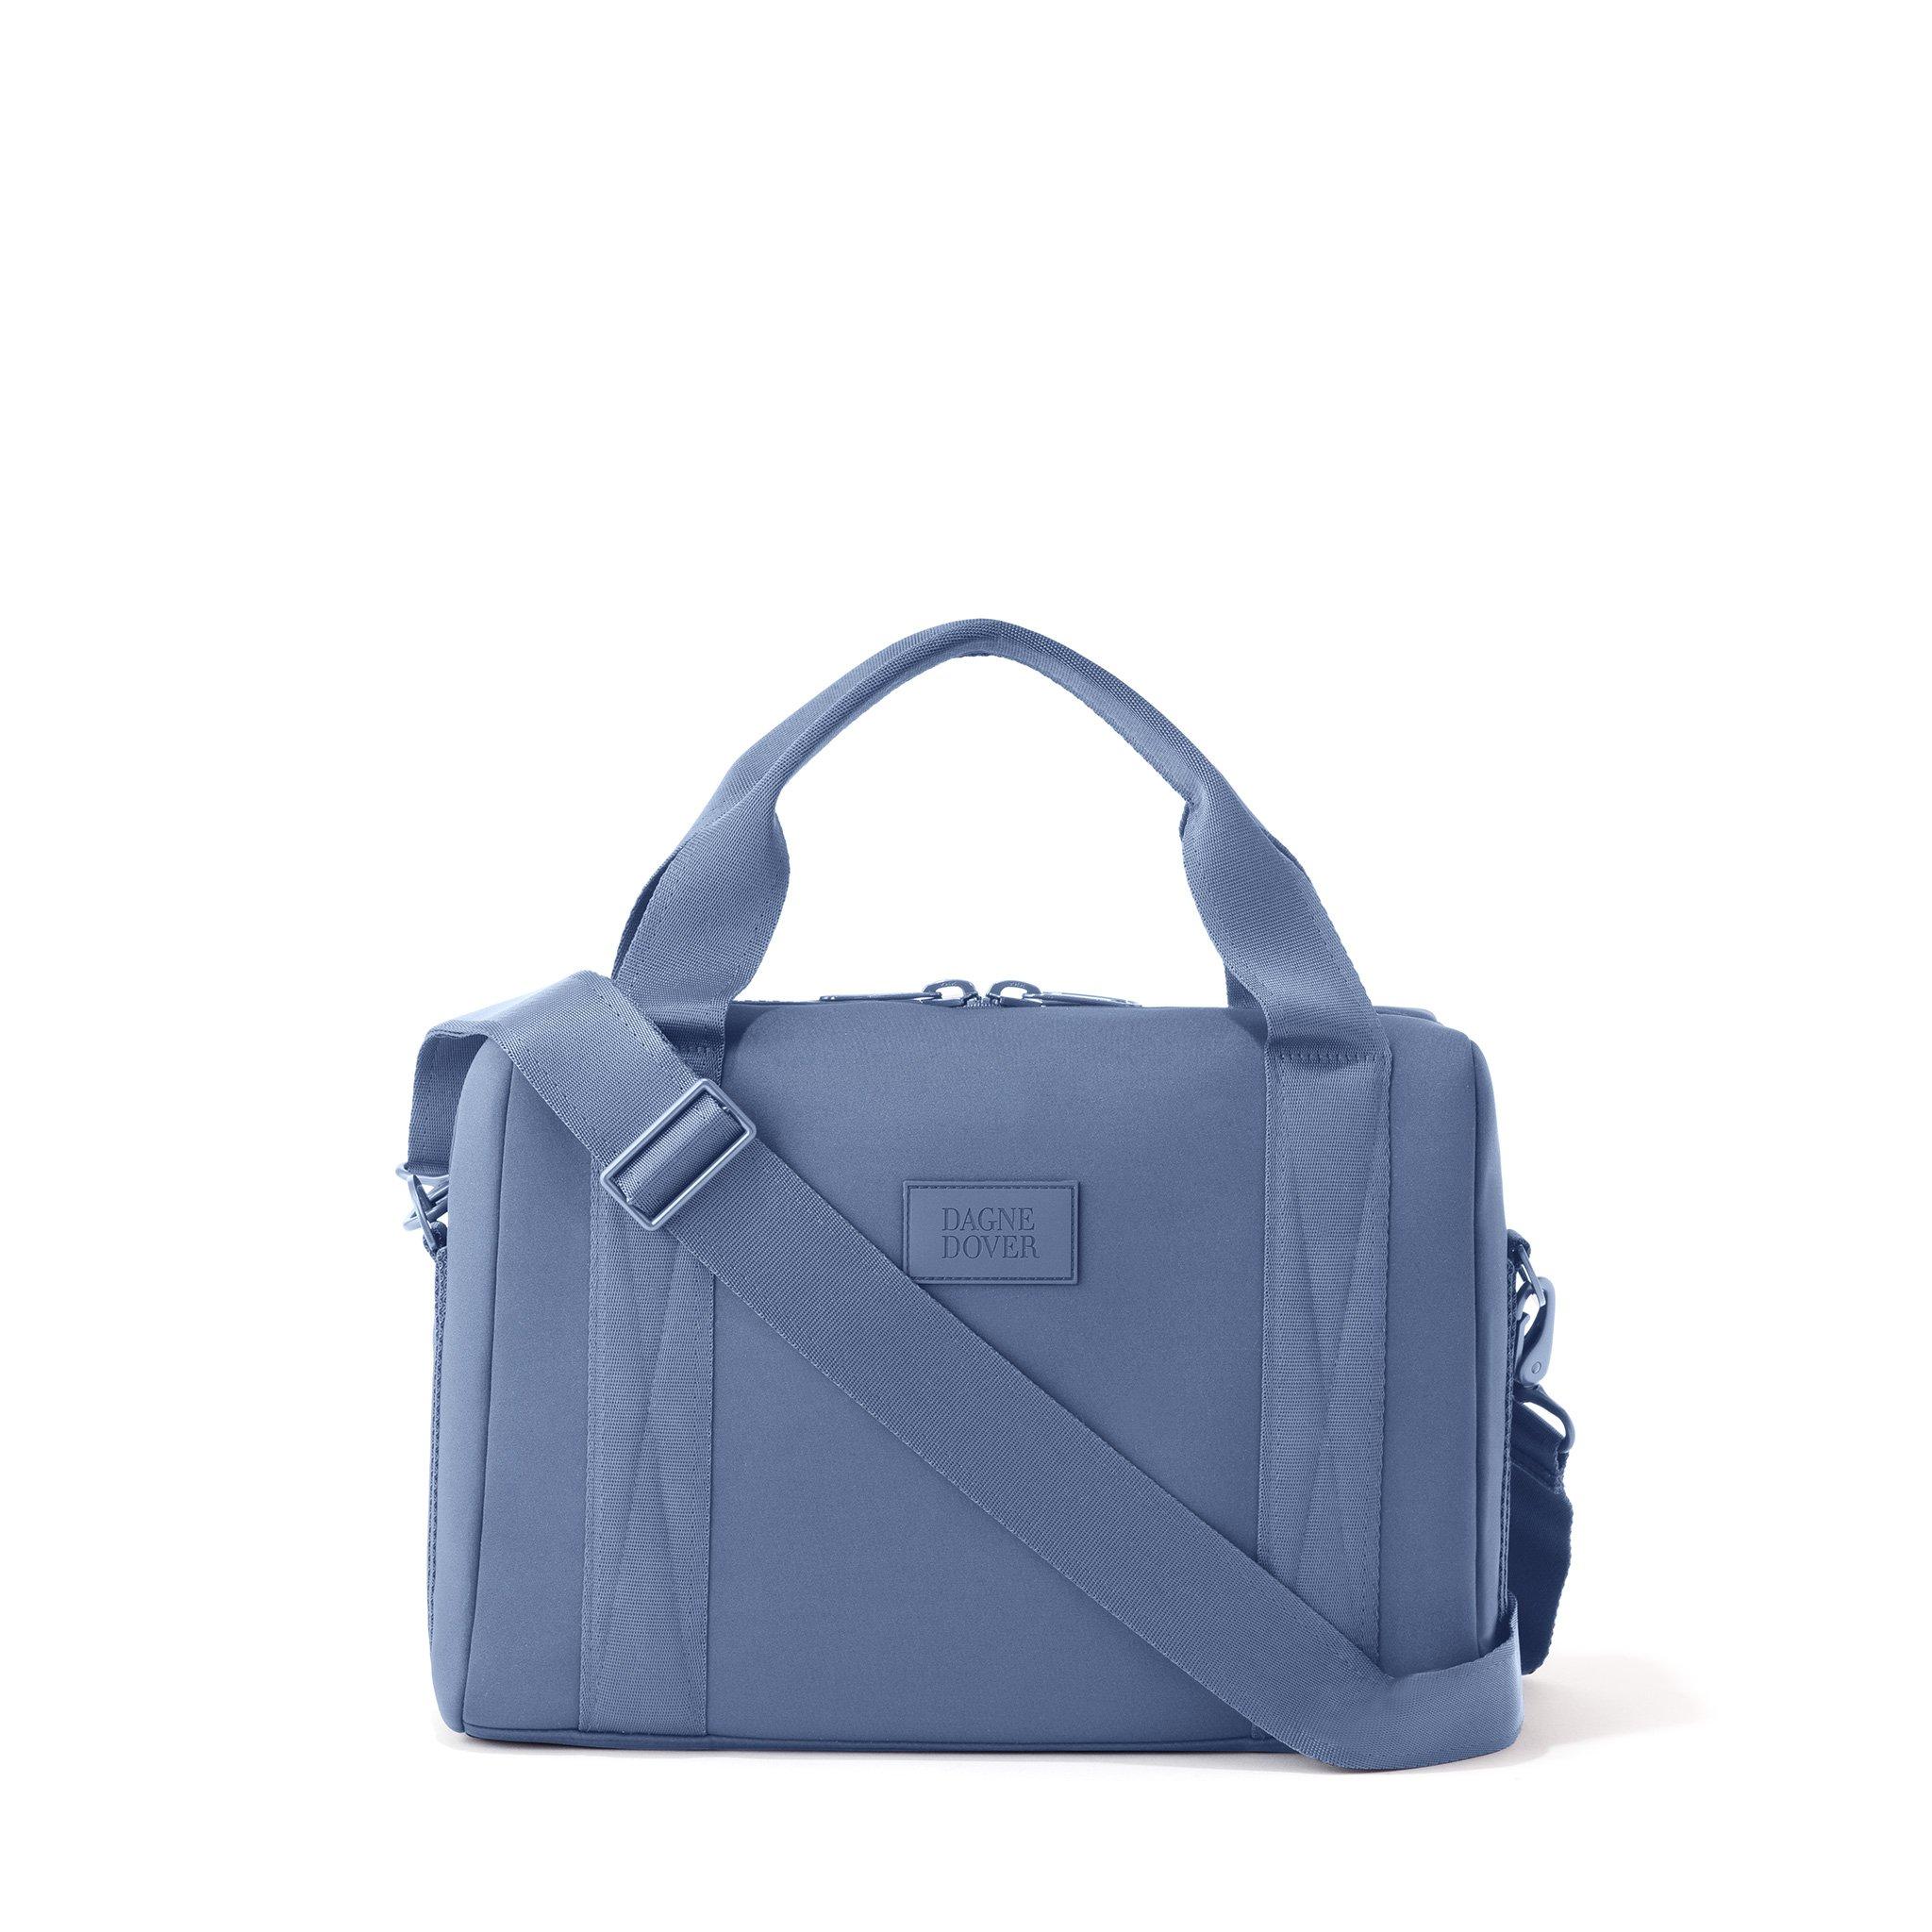 Dagne Dover Neoprene Weston Laptop Bag In Ash Blue, Medium - Lyst